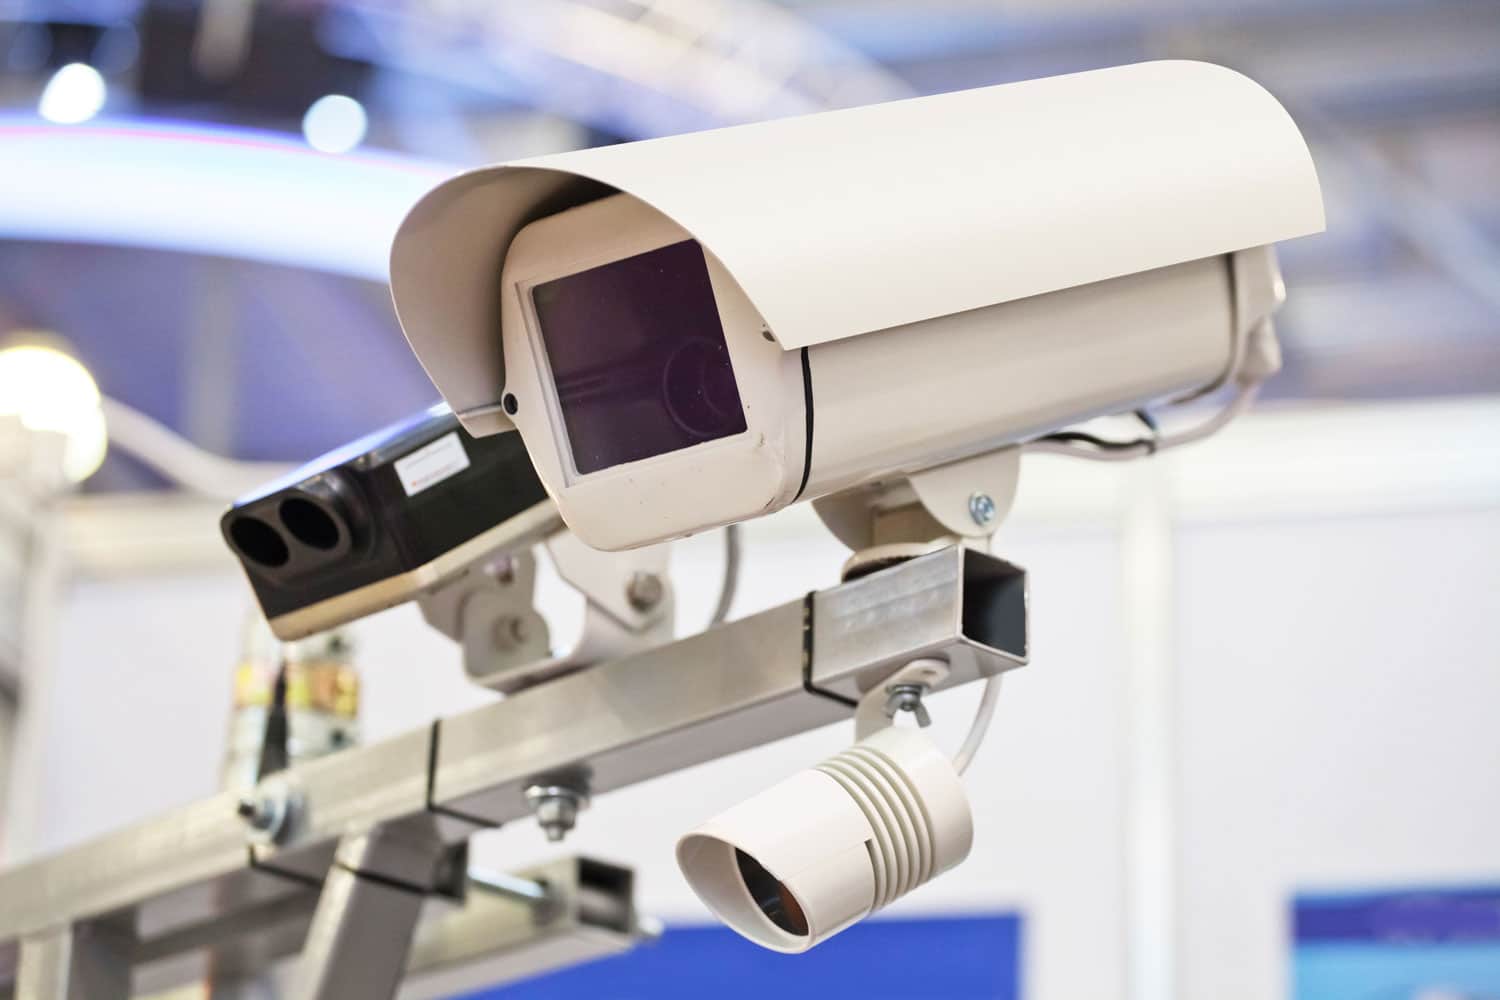 Retail Security Cameras surveillance